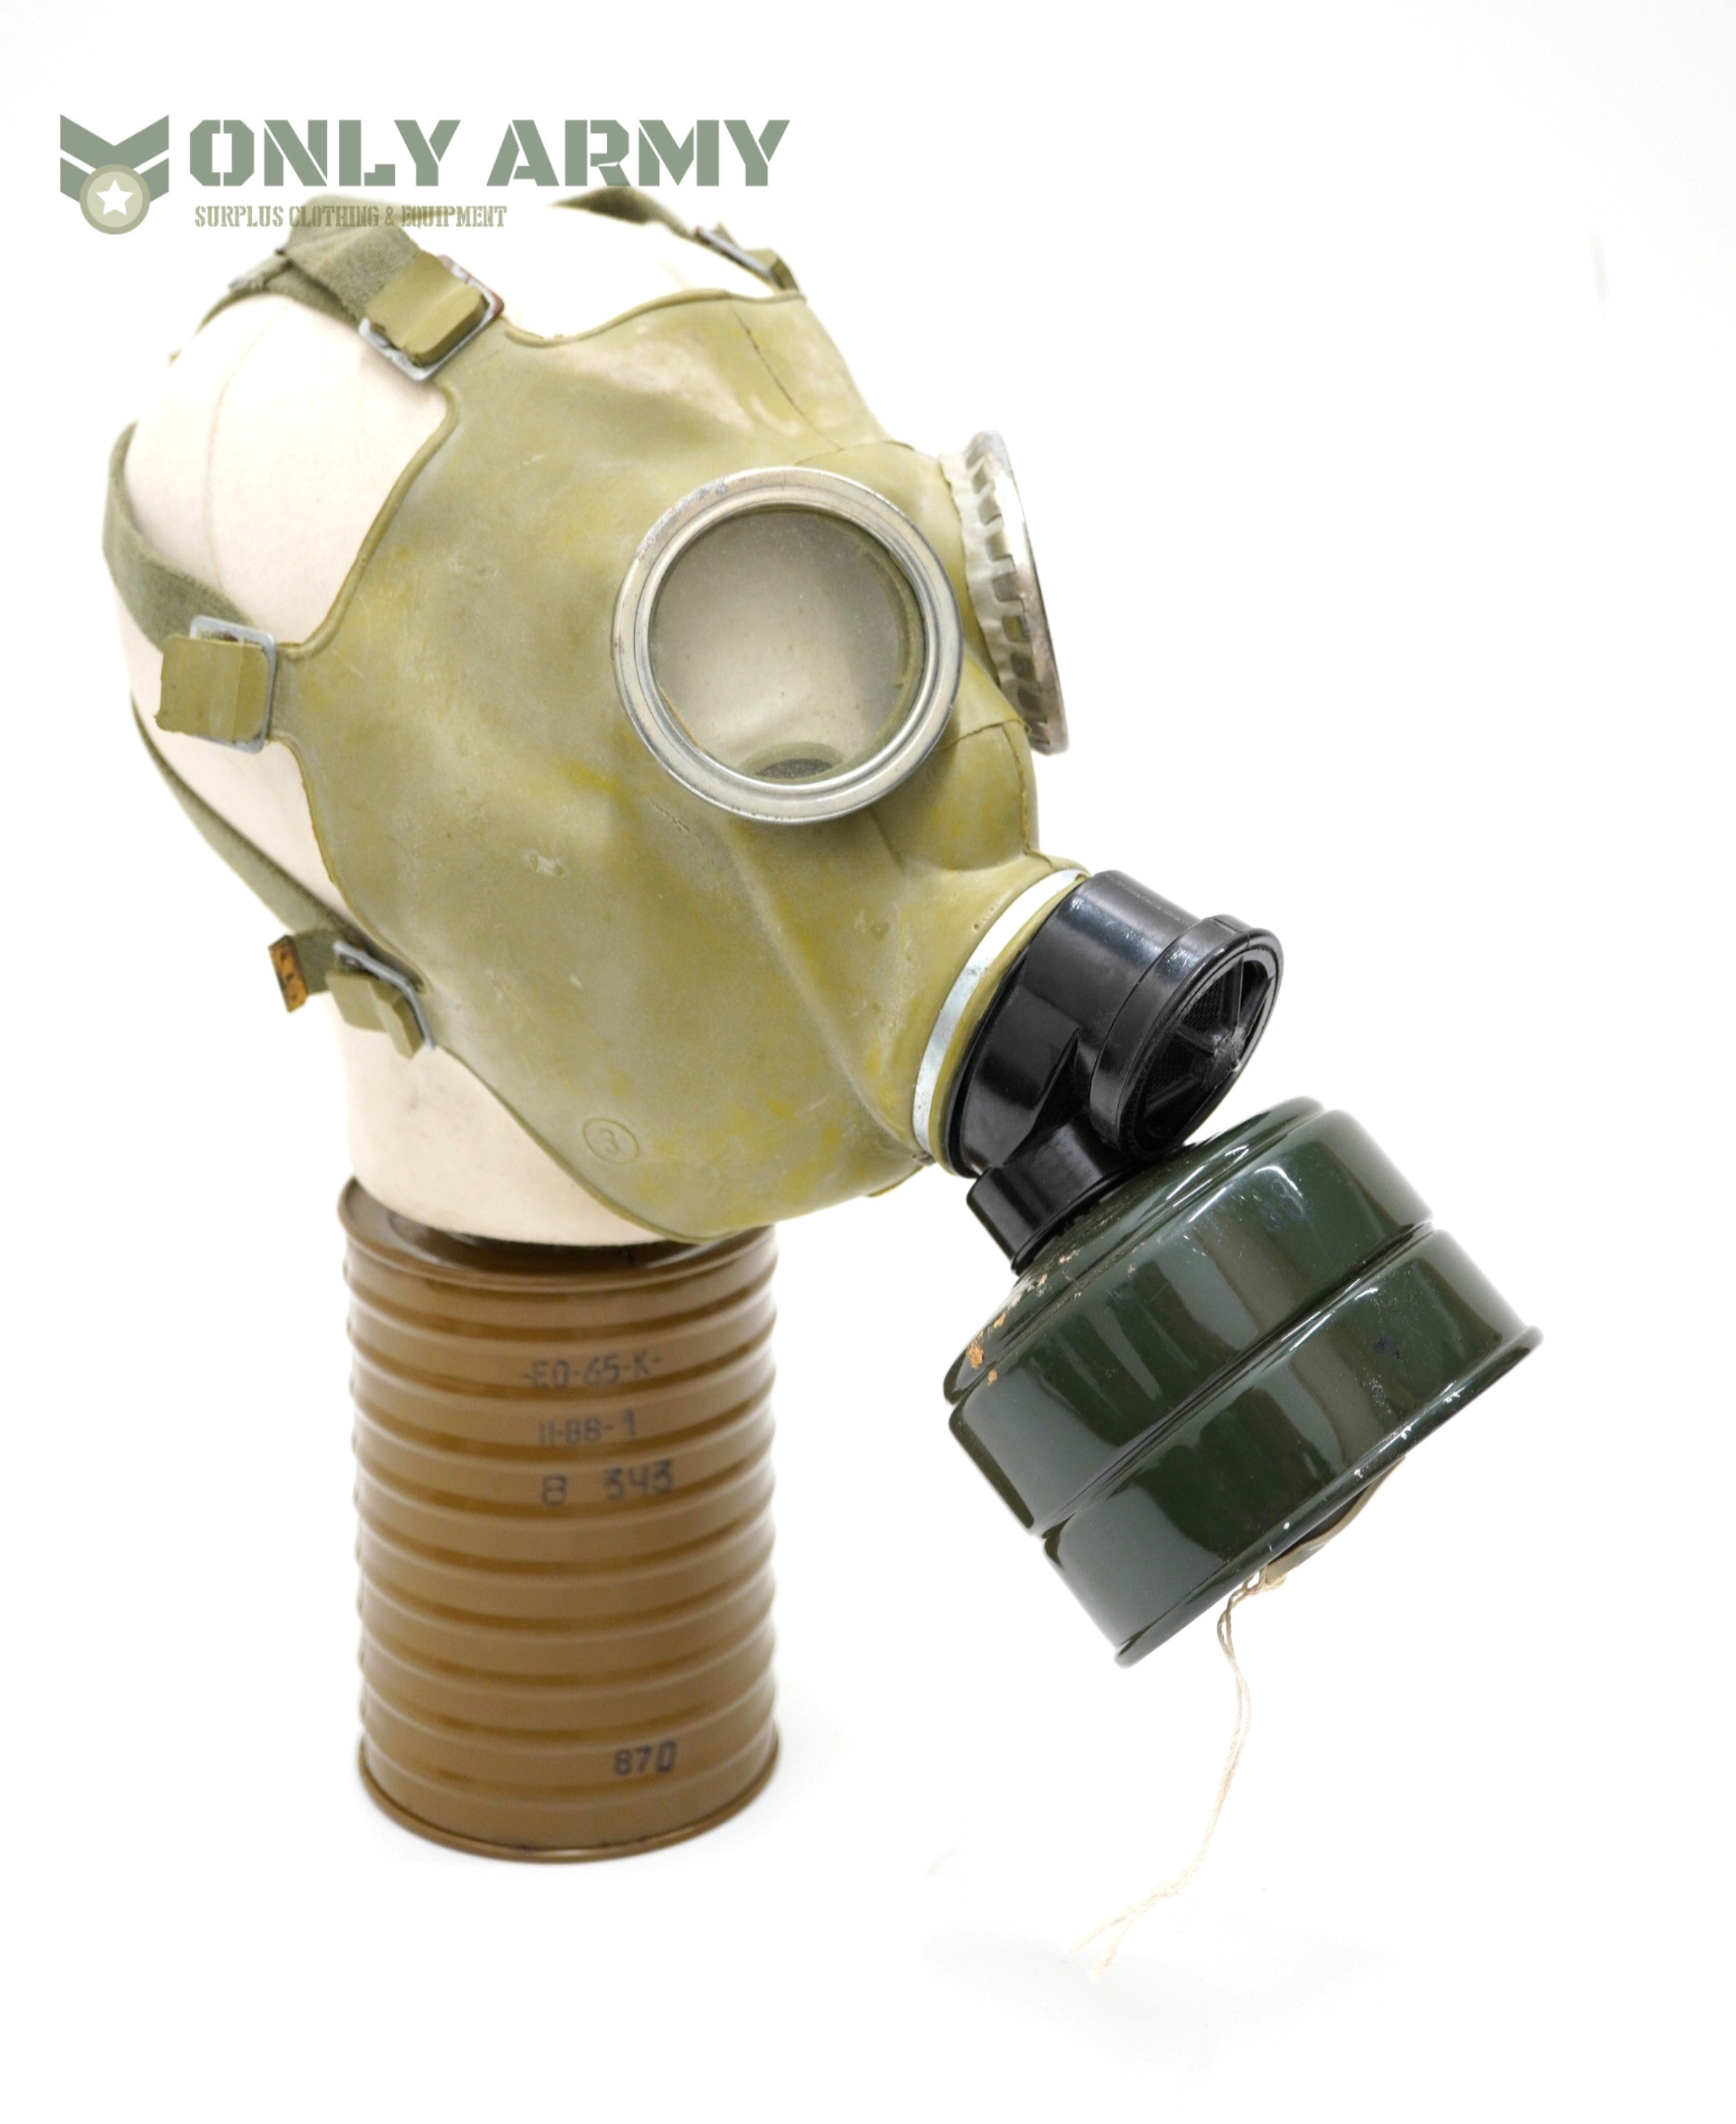 Polish Army MC-1 Gas Mask Set